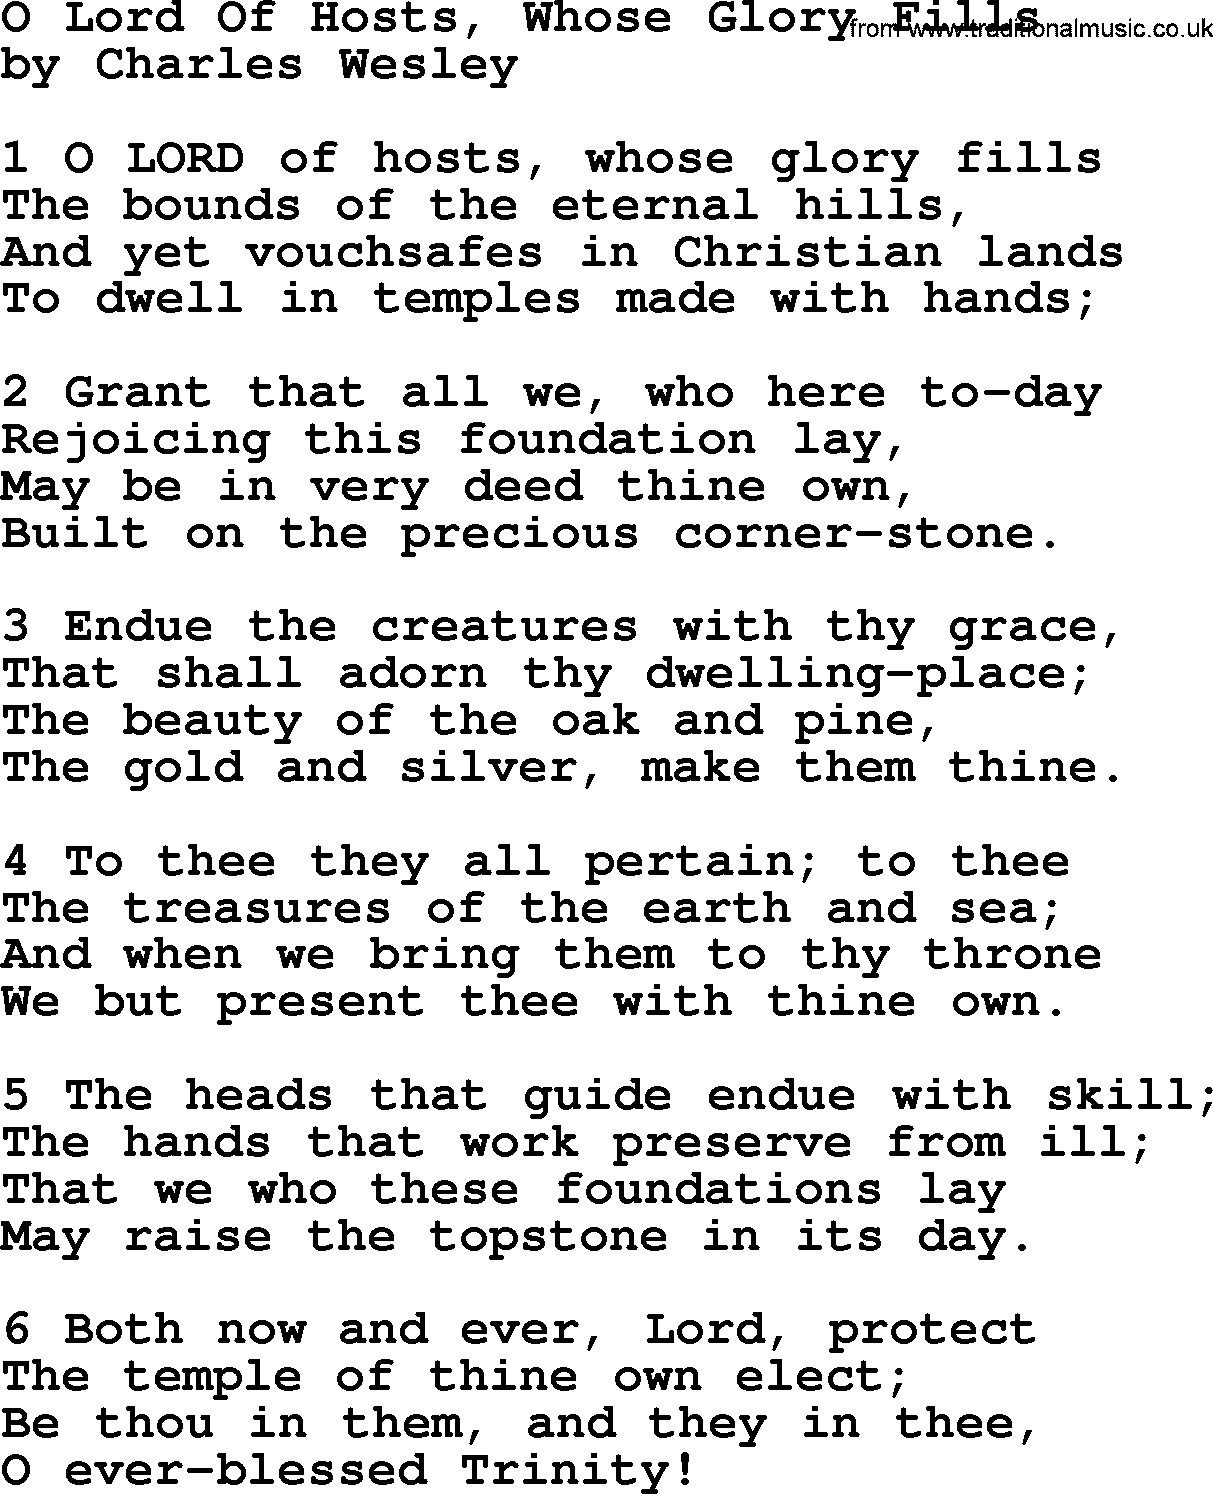 Charles Wesley hymn: O Lord Of Hosts, Whose Glory Fills, lyrics